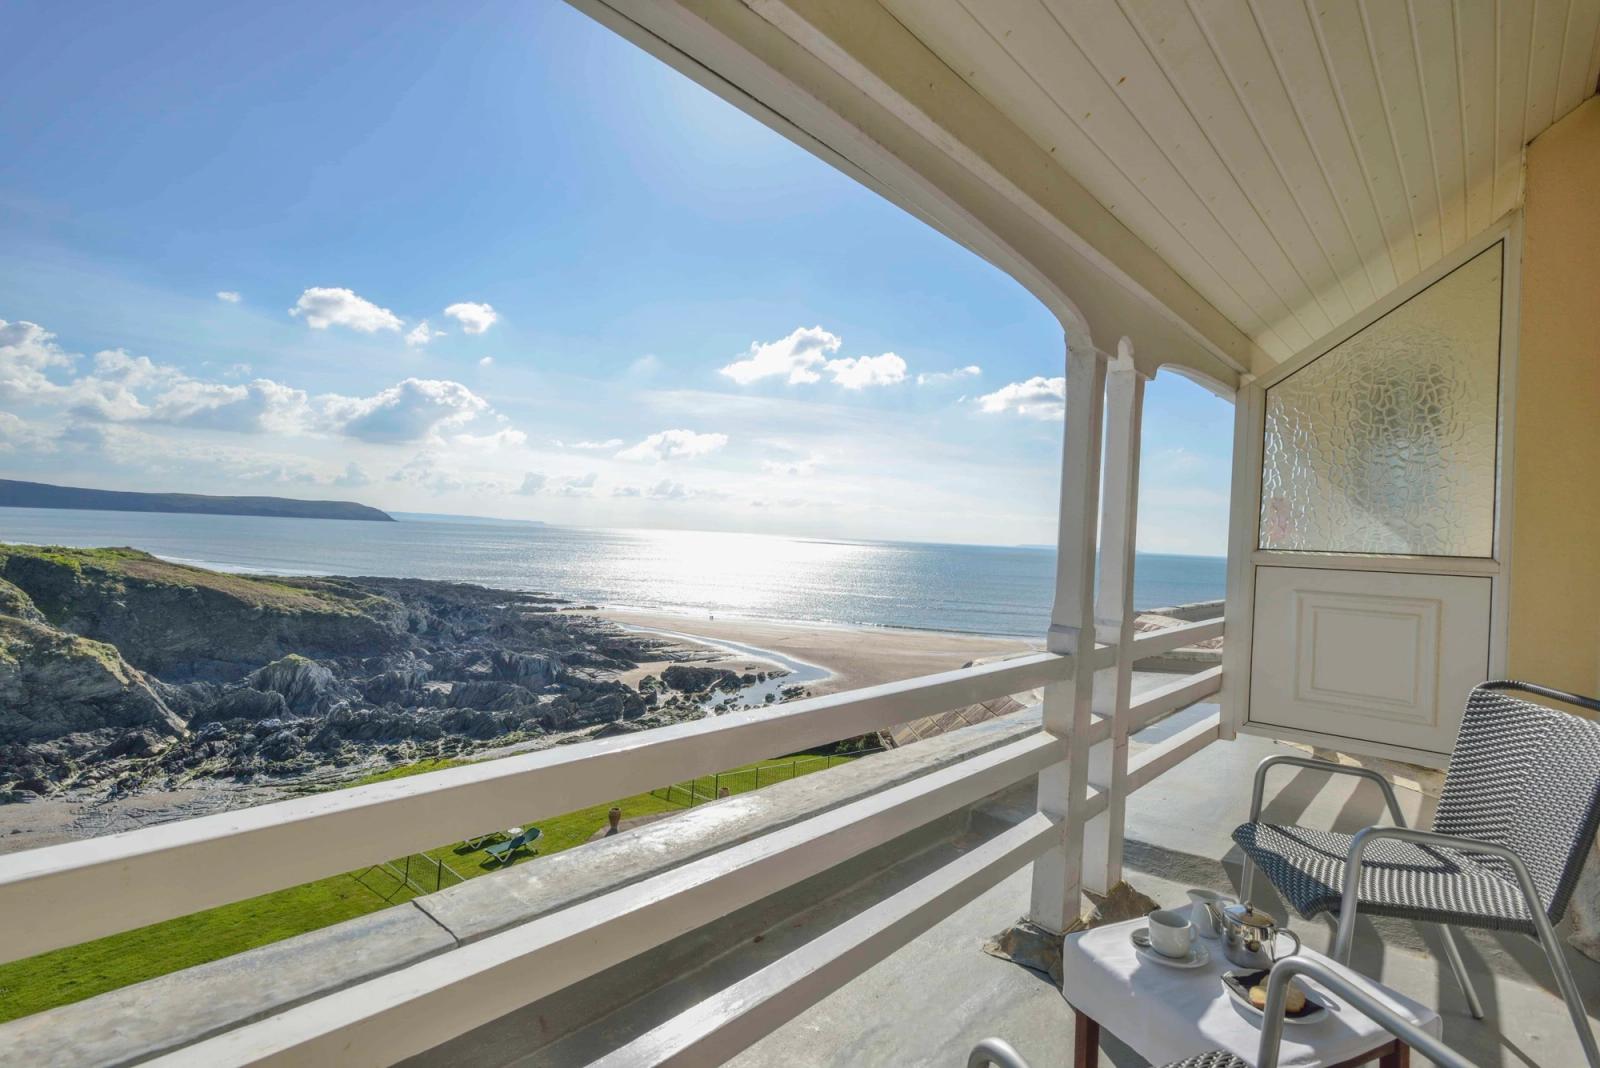 Hotels by the sea in Devon